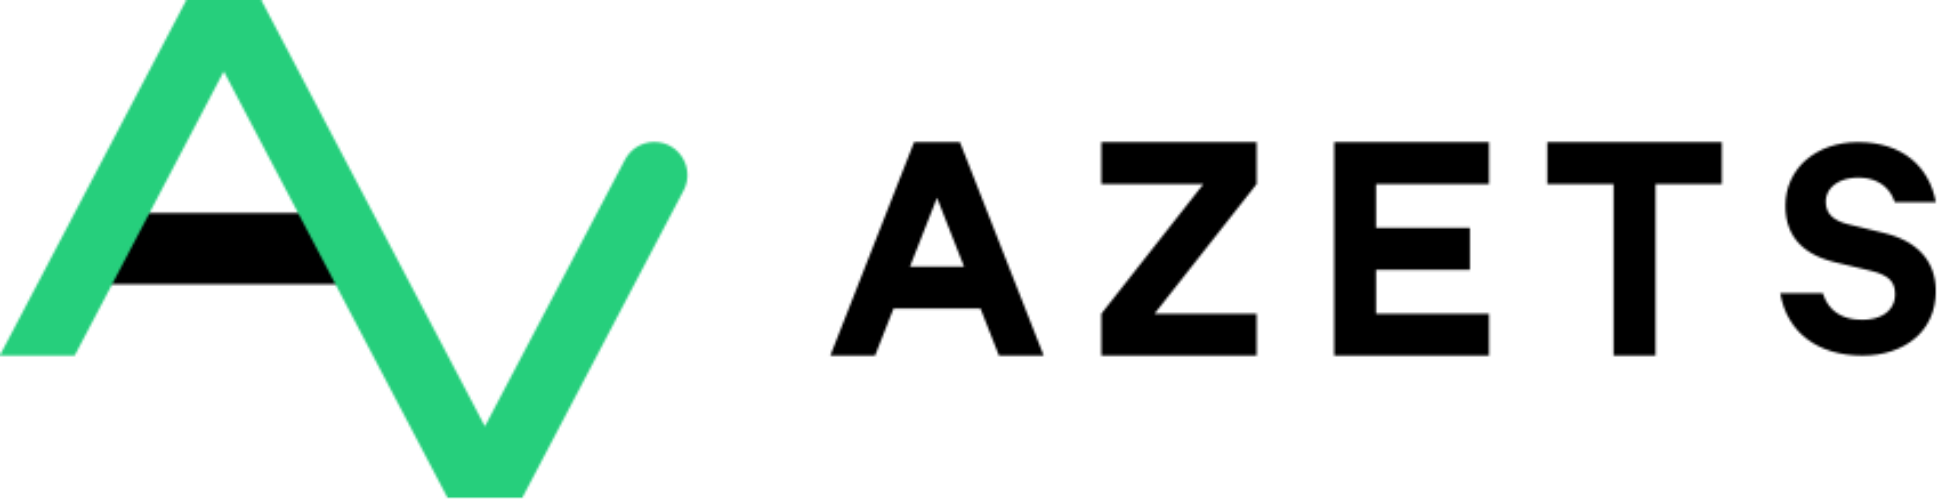 Azets logo L